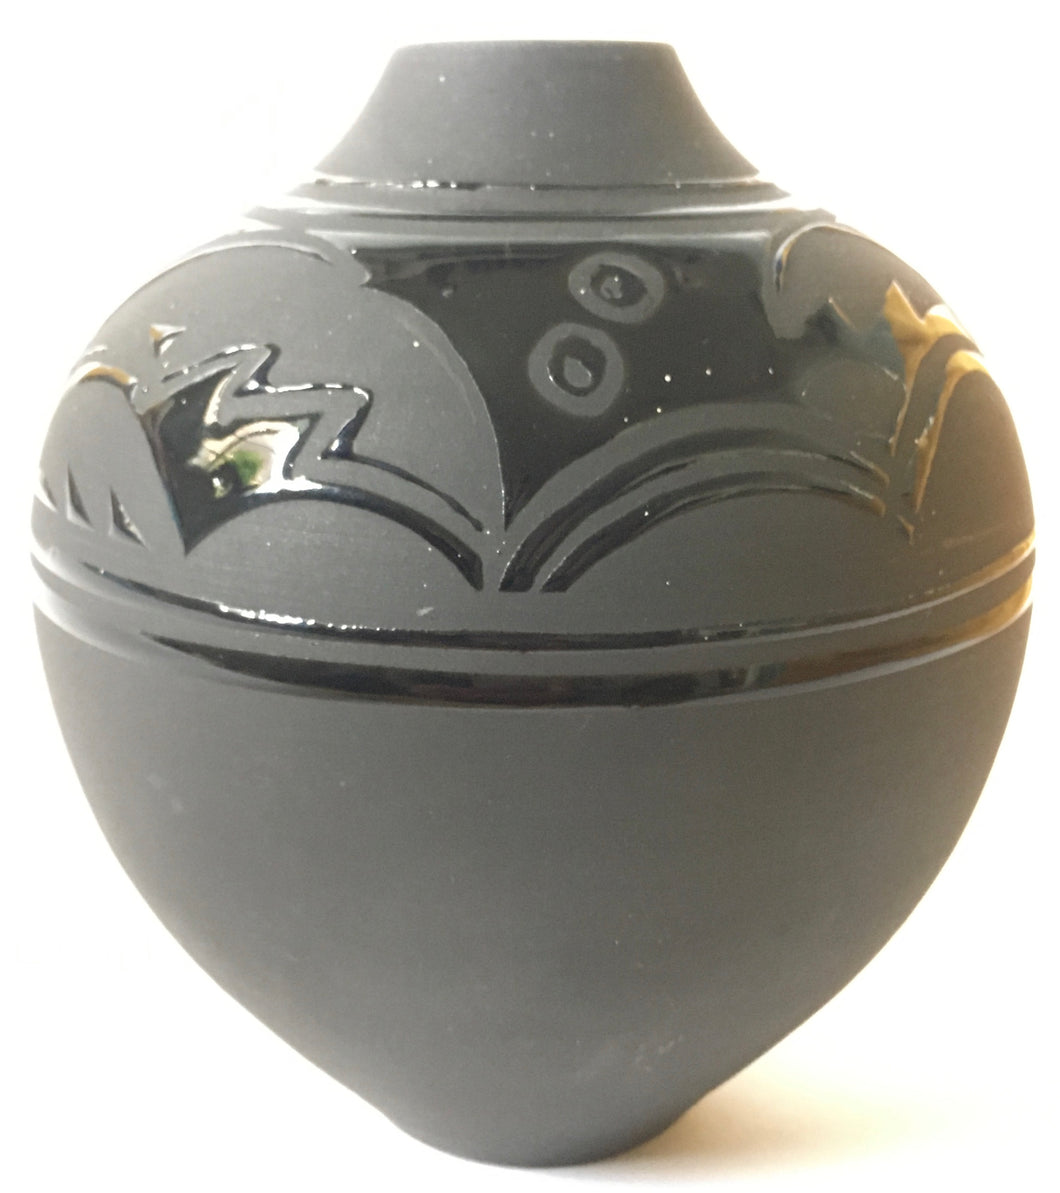 Angelique Kirk ceramic vase - hand made studio art pottery early 1990s - Minimalist aesthetic - smaller vase